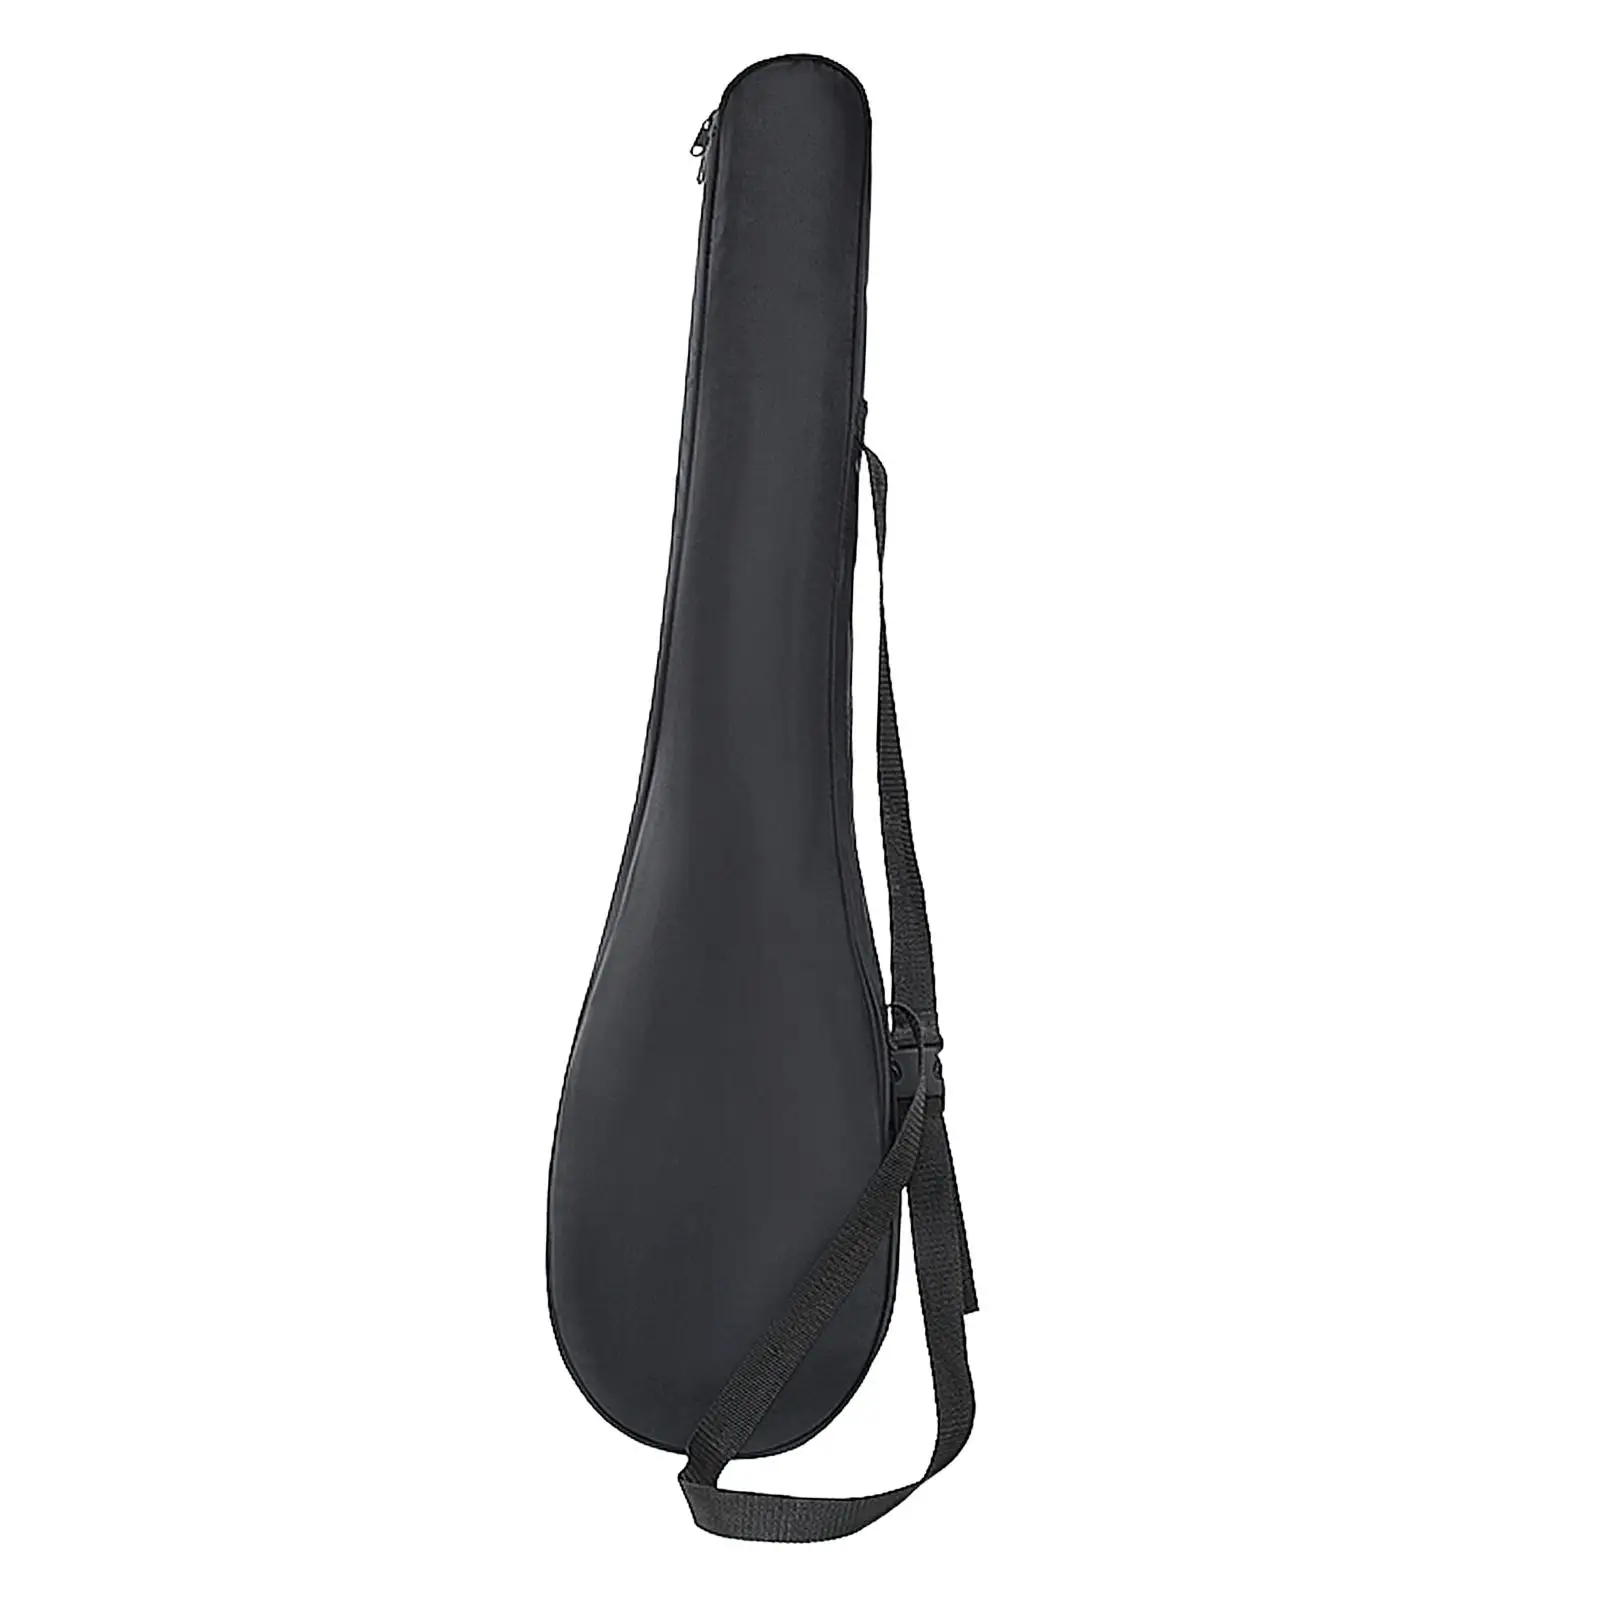 Kayak Paddle Bag for Split Paddle Oxford Cloth Kayak Paddle Cover Lightweight Wear Resistant Protector Paddle Carrier Bag Holder